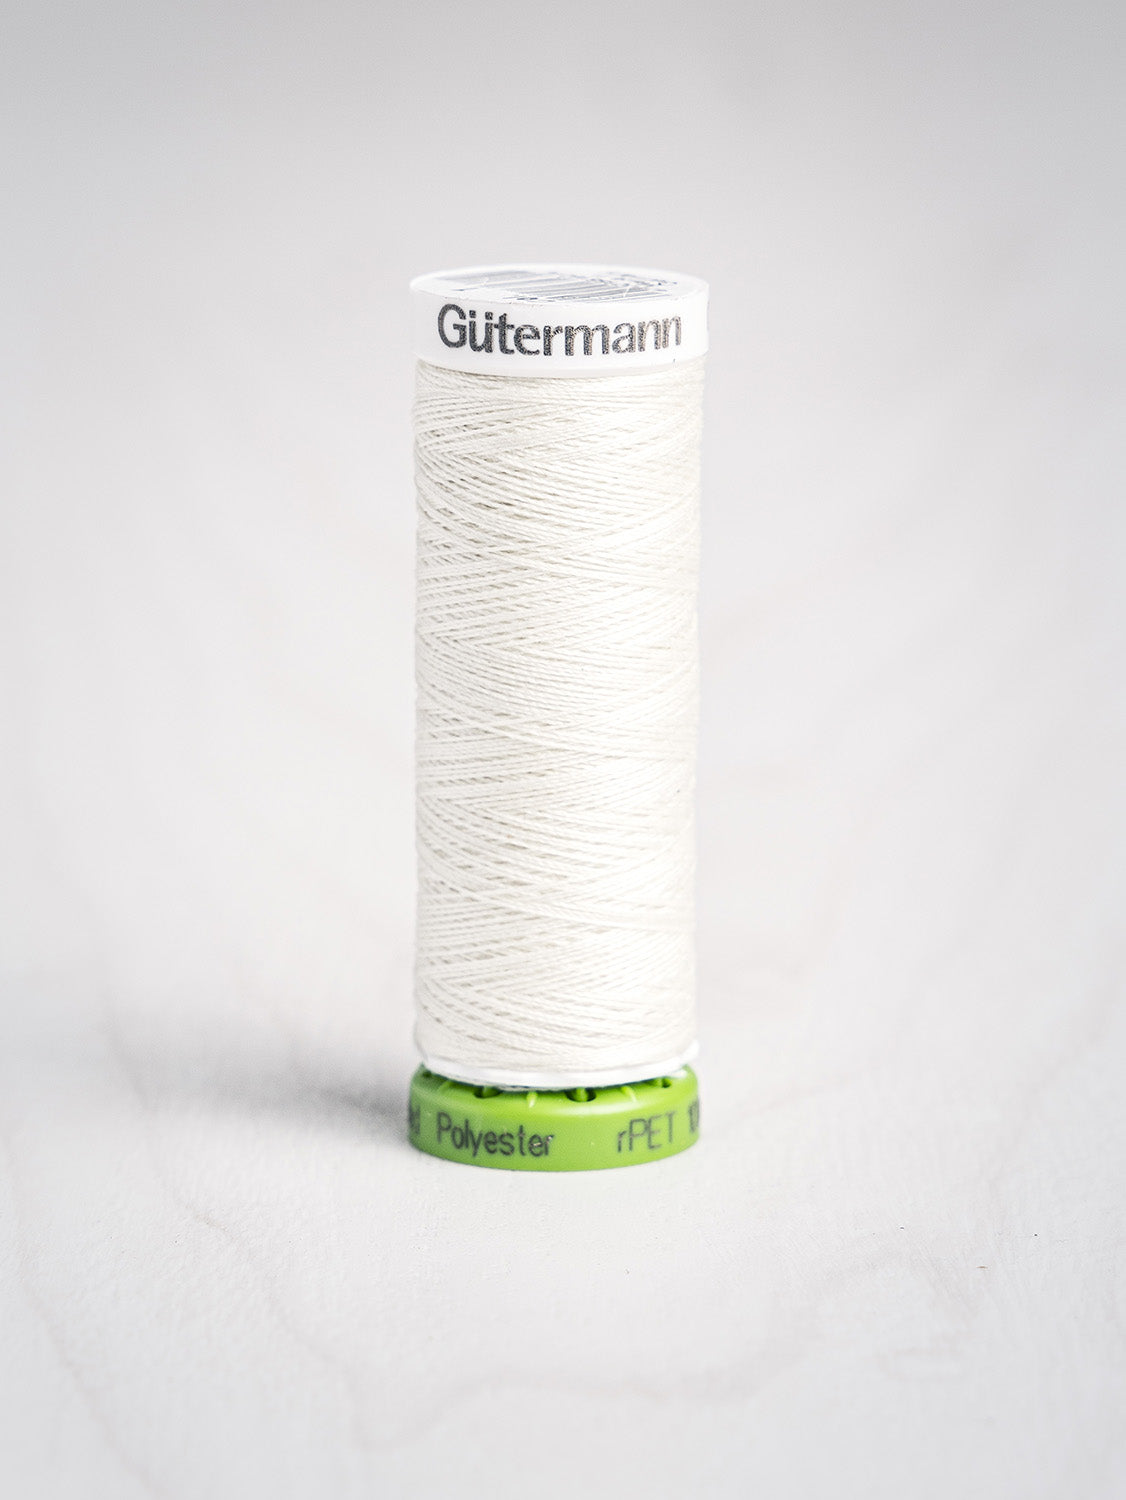 Gütermann All Purpose rPET Recycled Thread - Cream 001